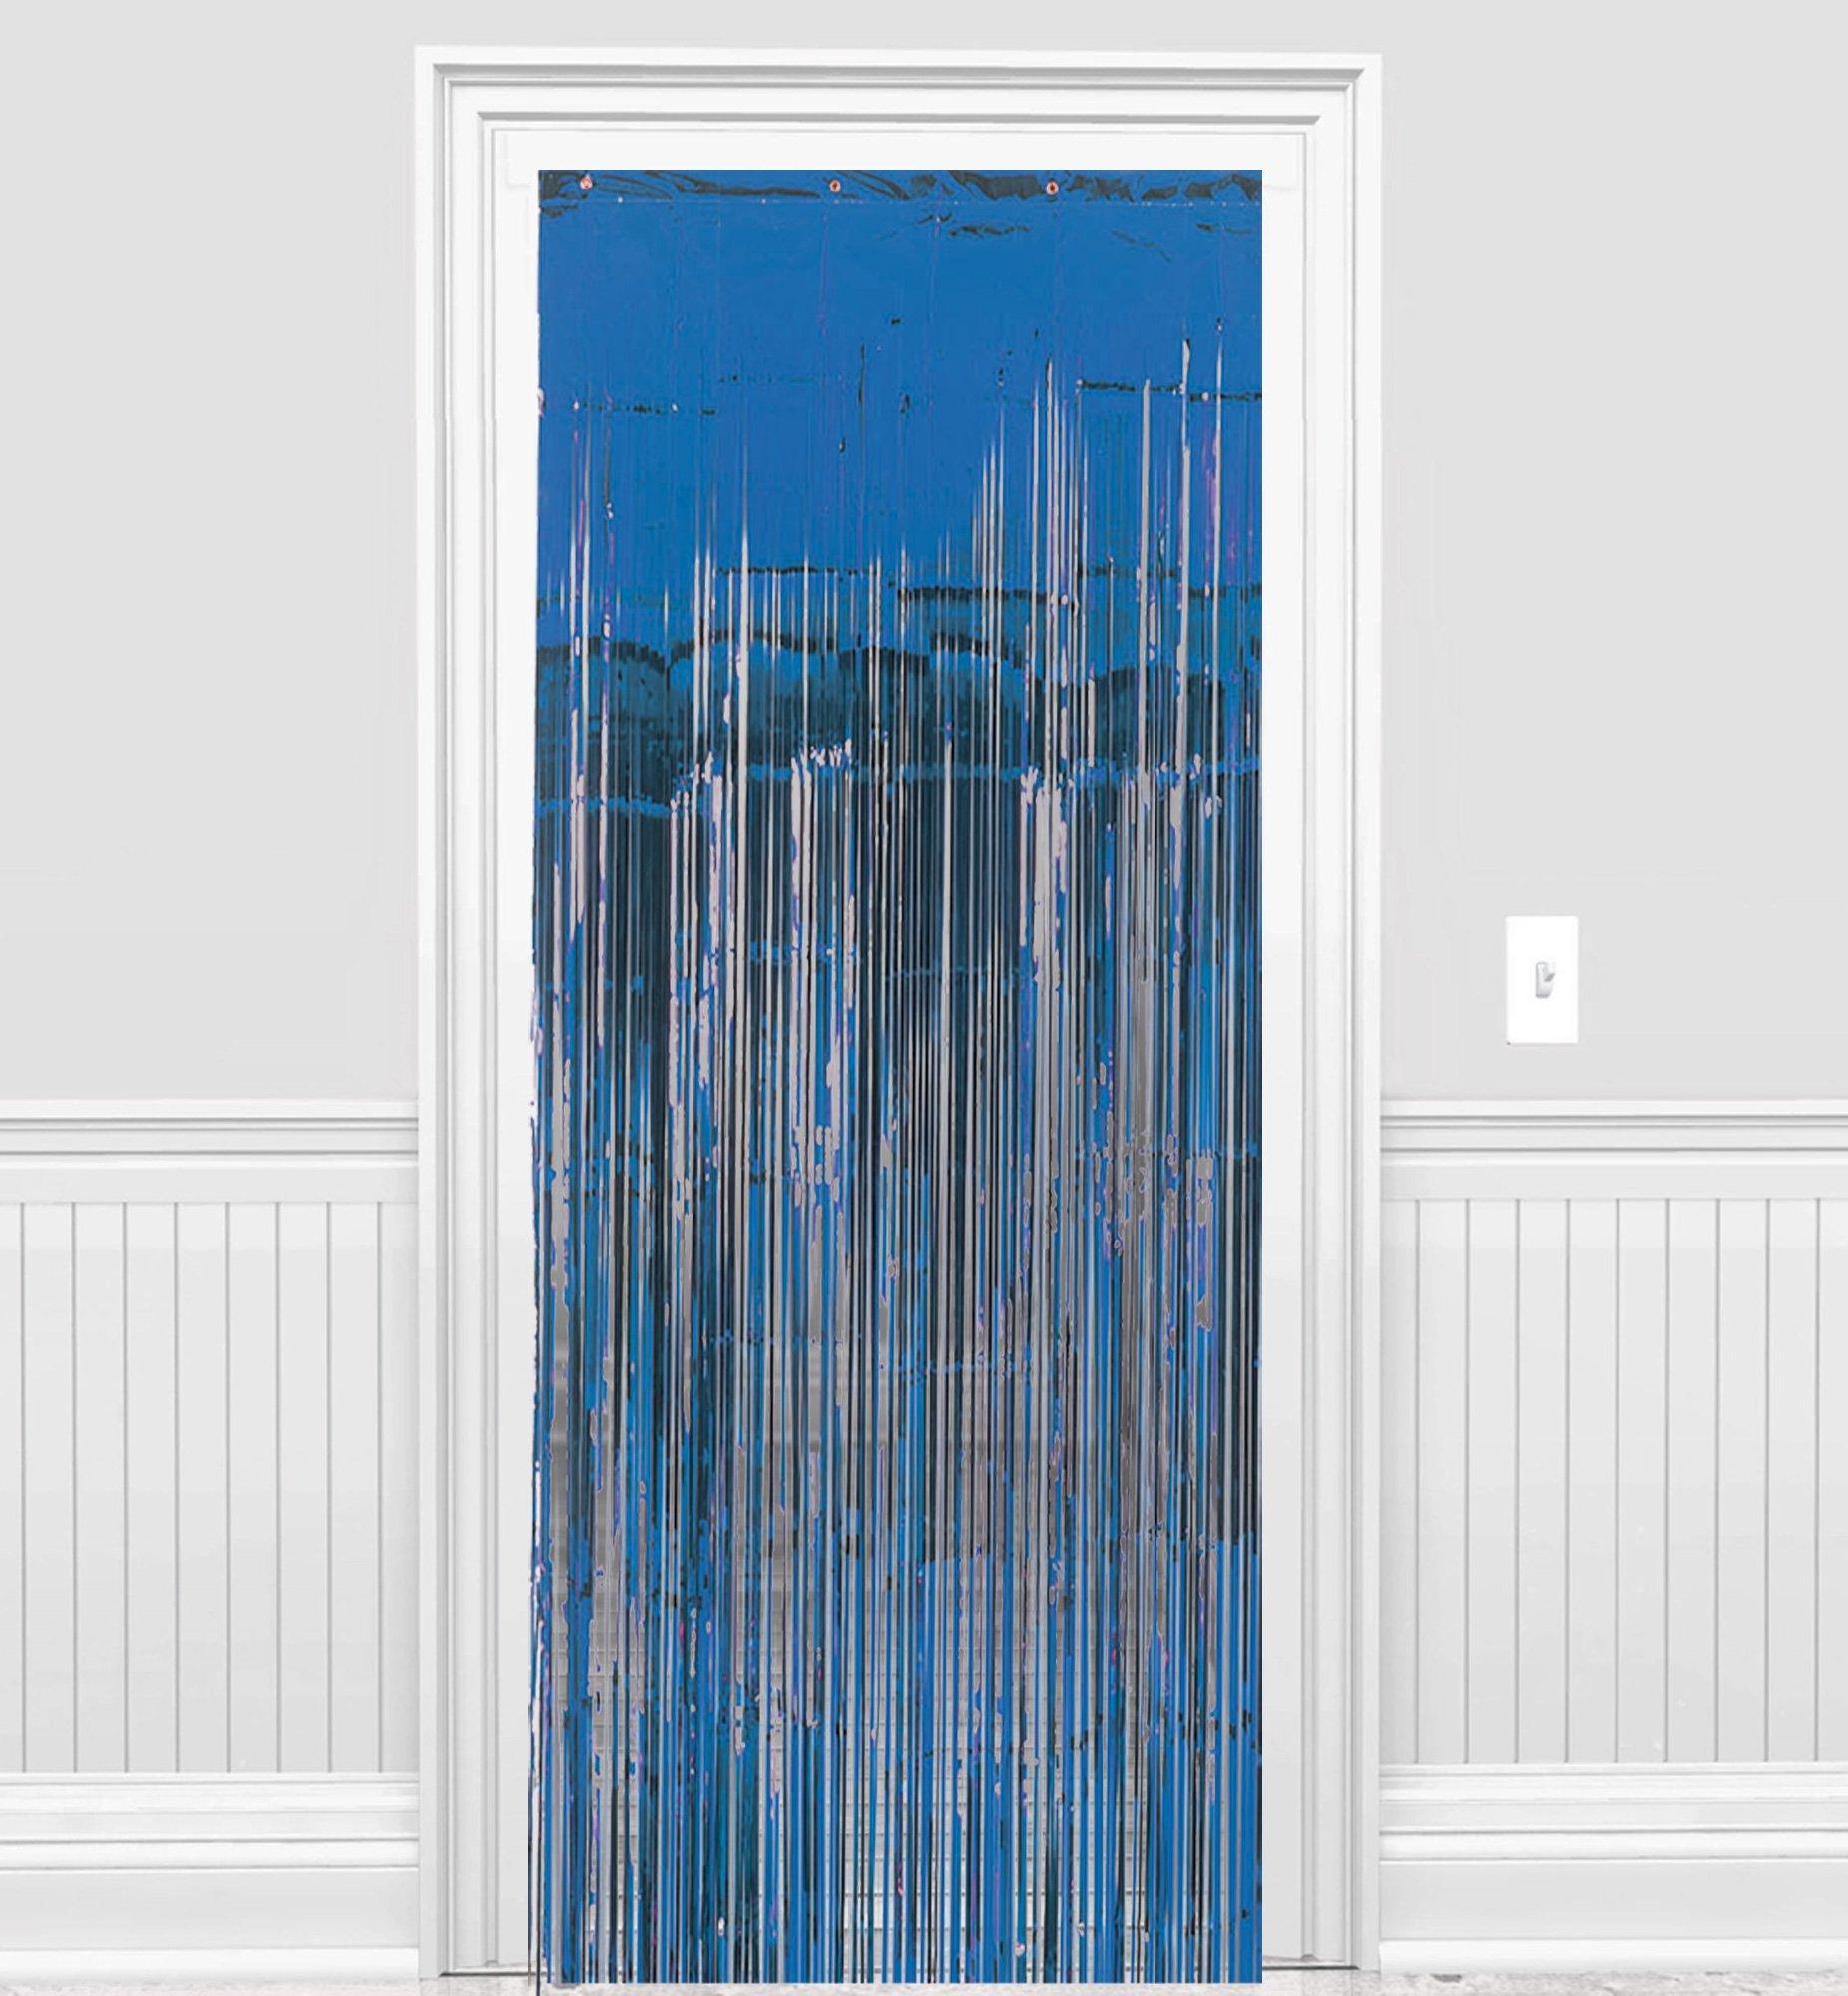 Foil Fringe Doorway Curtain, 3ft x 8ft